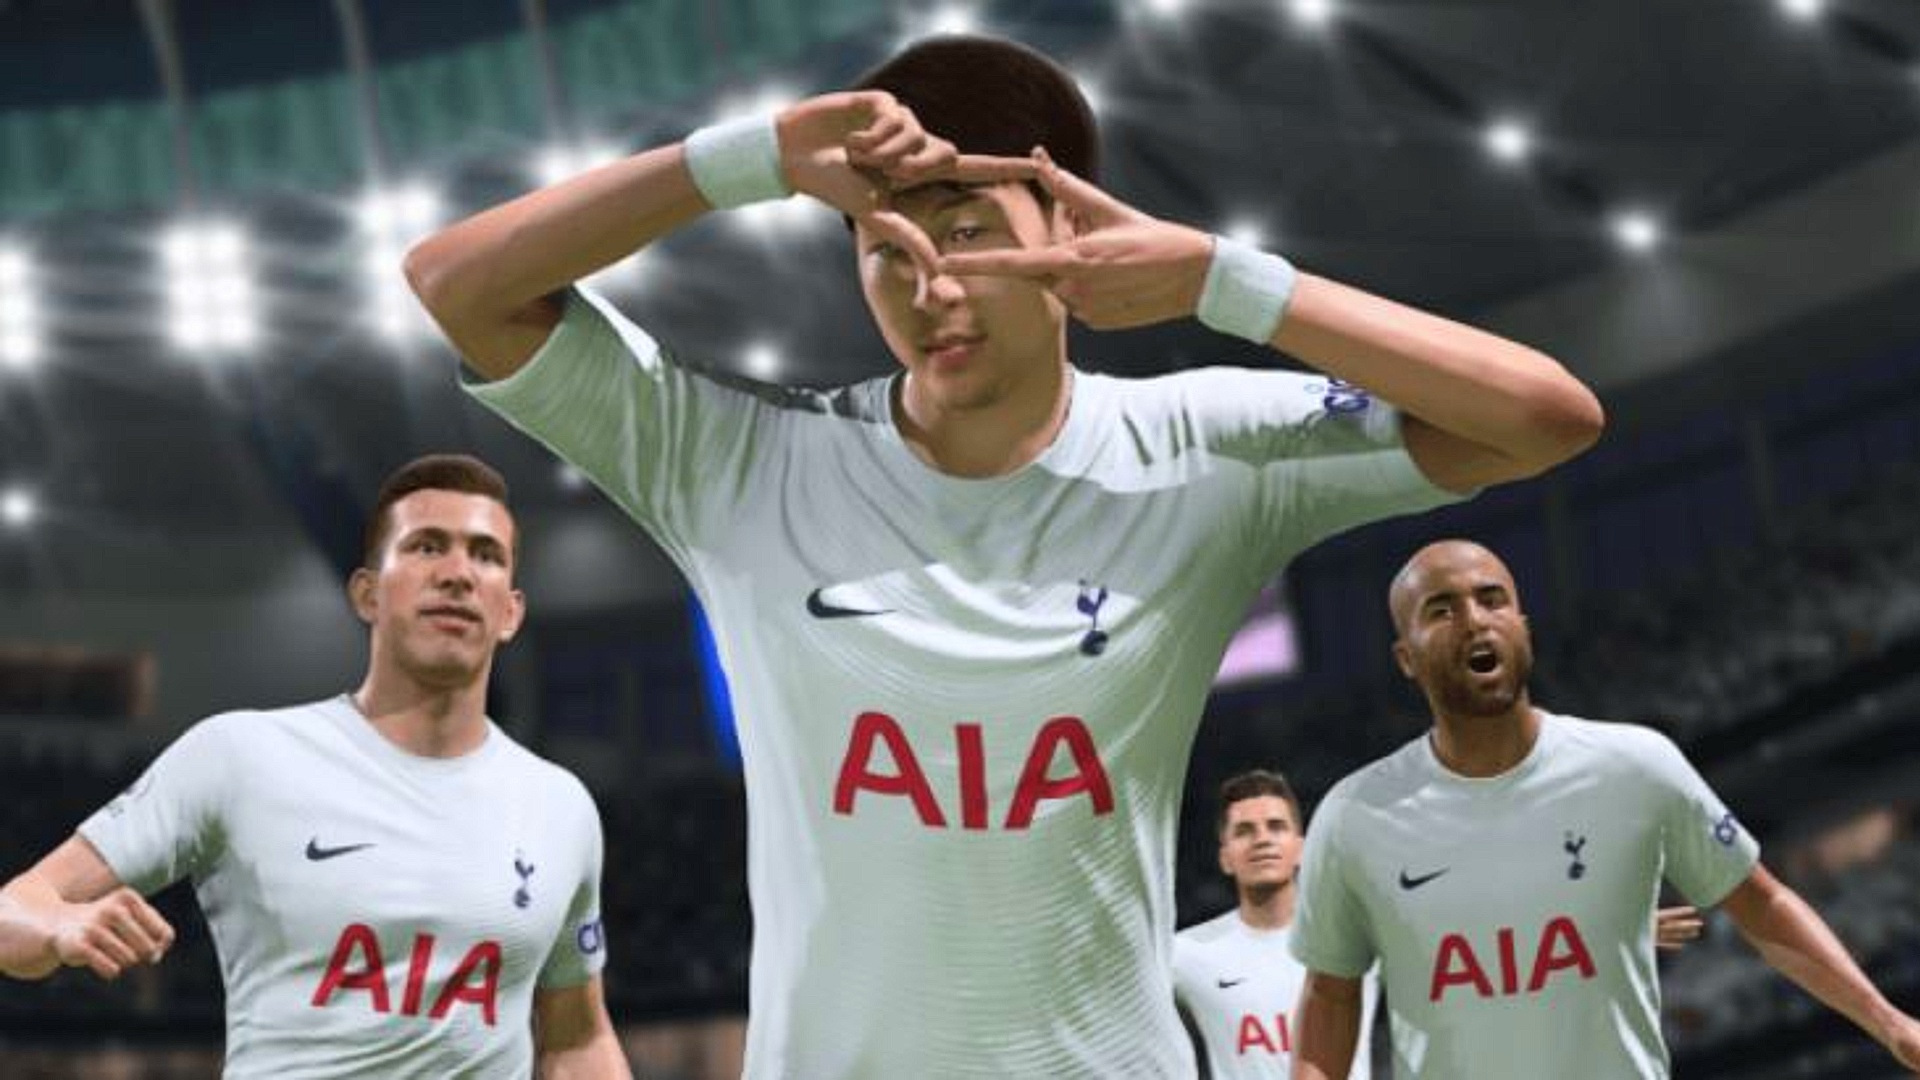 FIFA 22 release date: A screenshot of Heung-min Son, celebrating a goal.